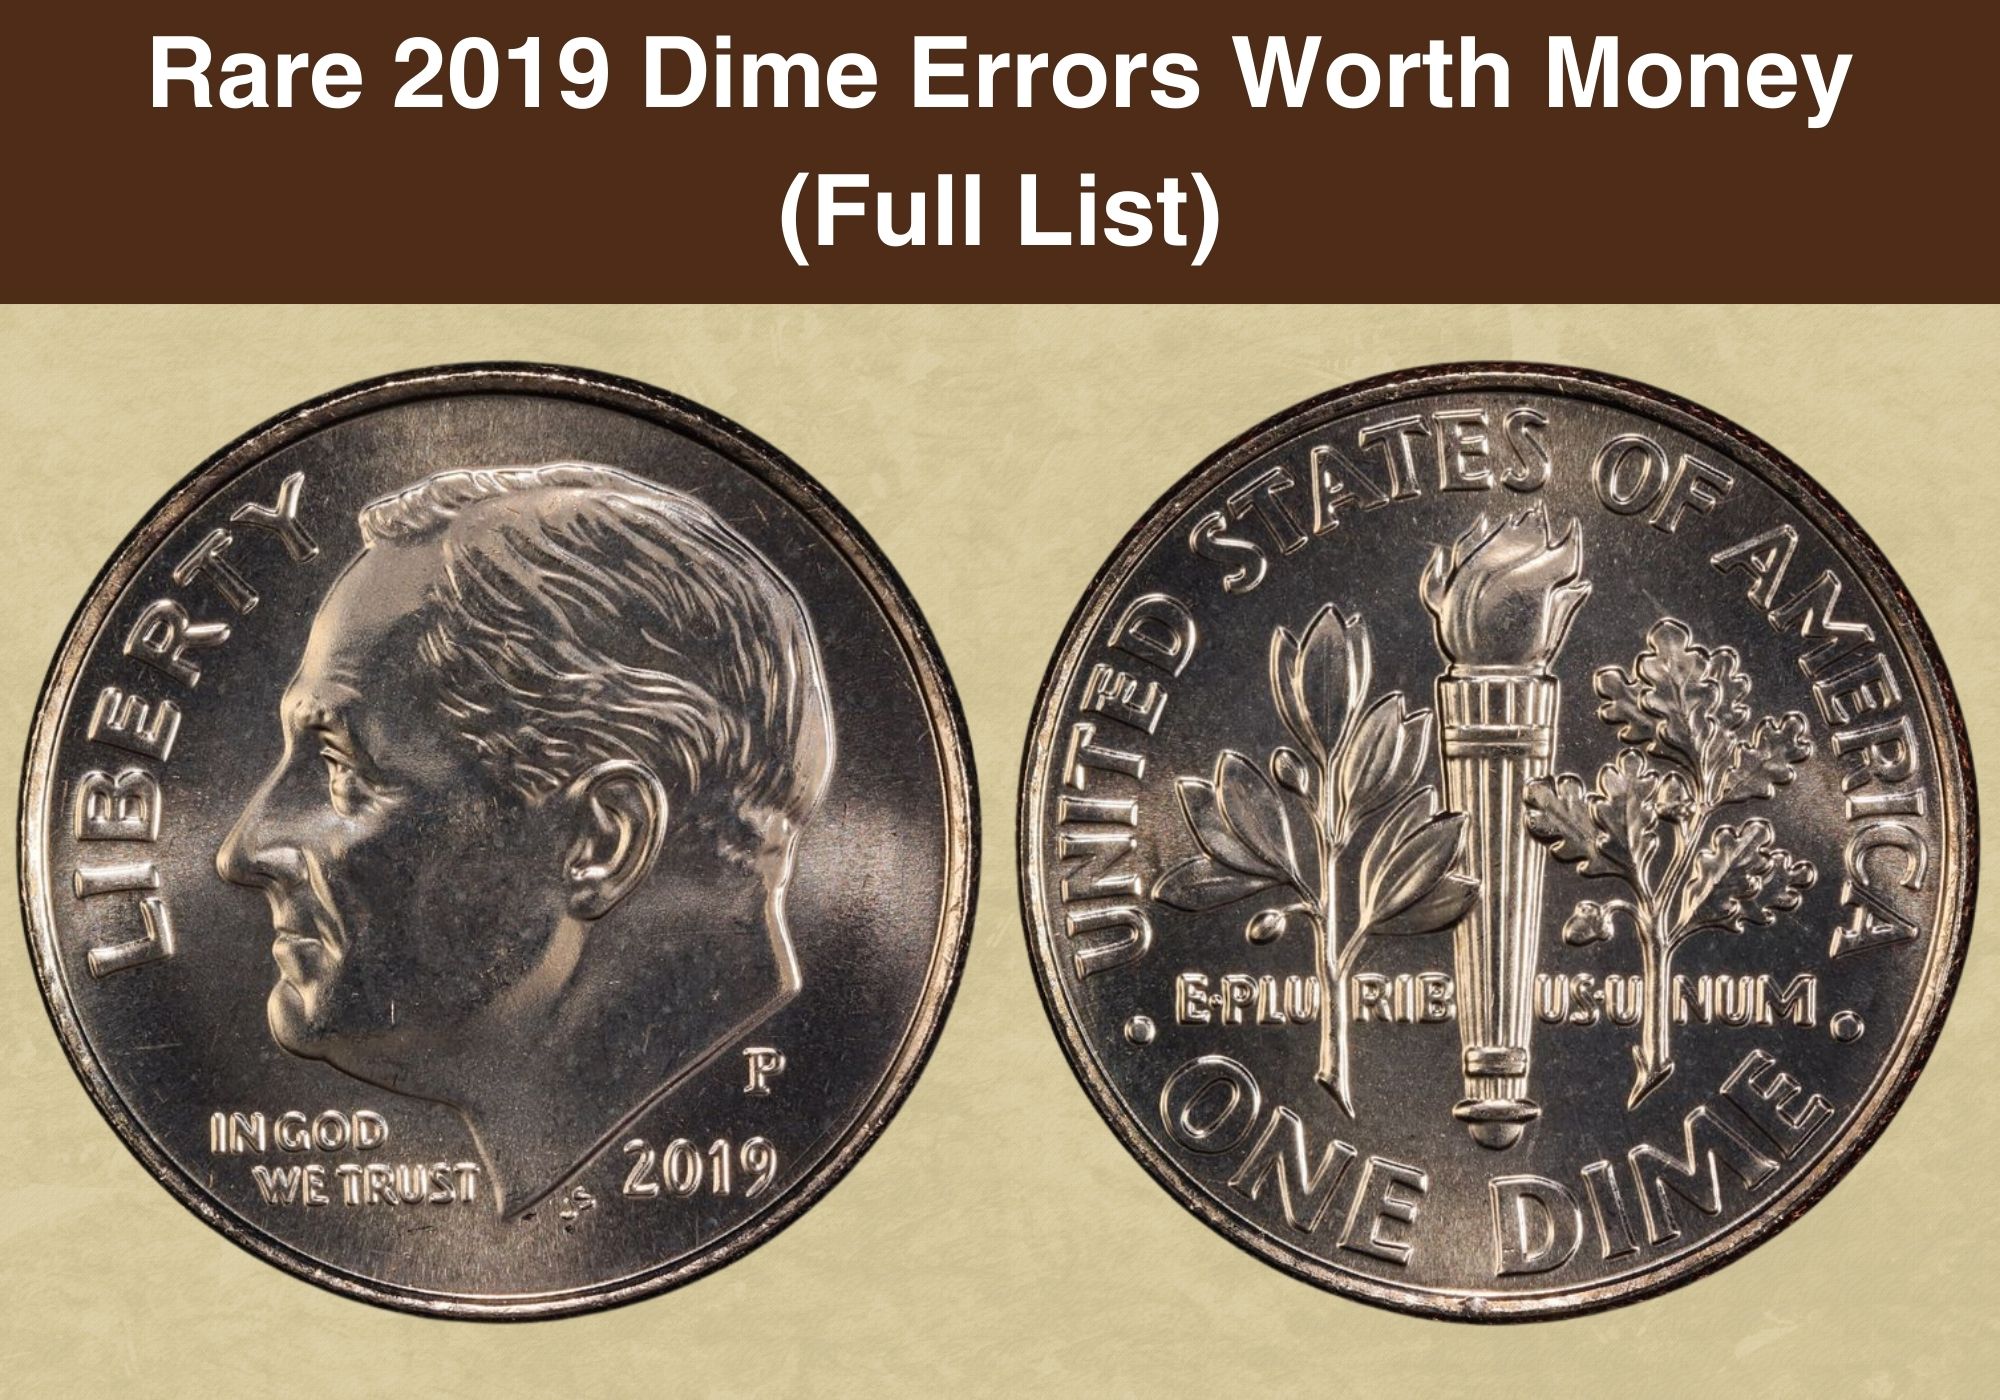 Rare 2019 Dime Errors Worth Money (Full List)